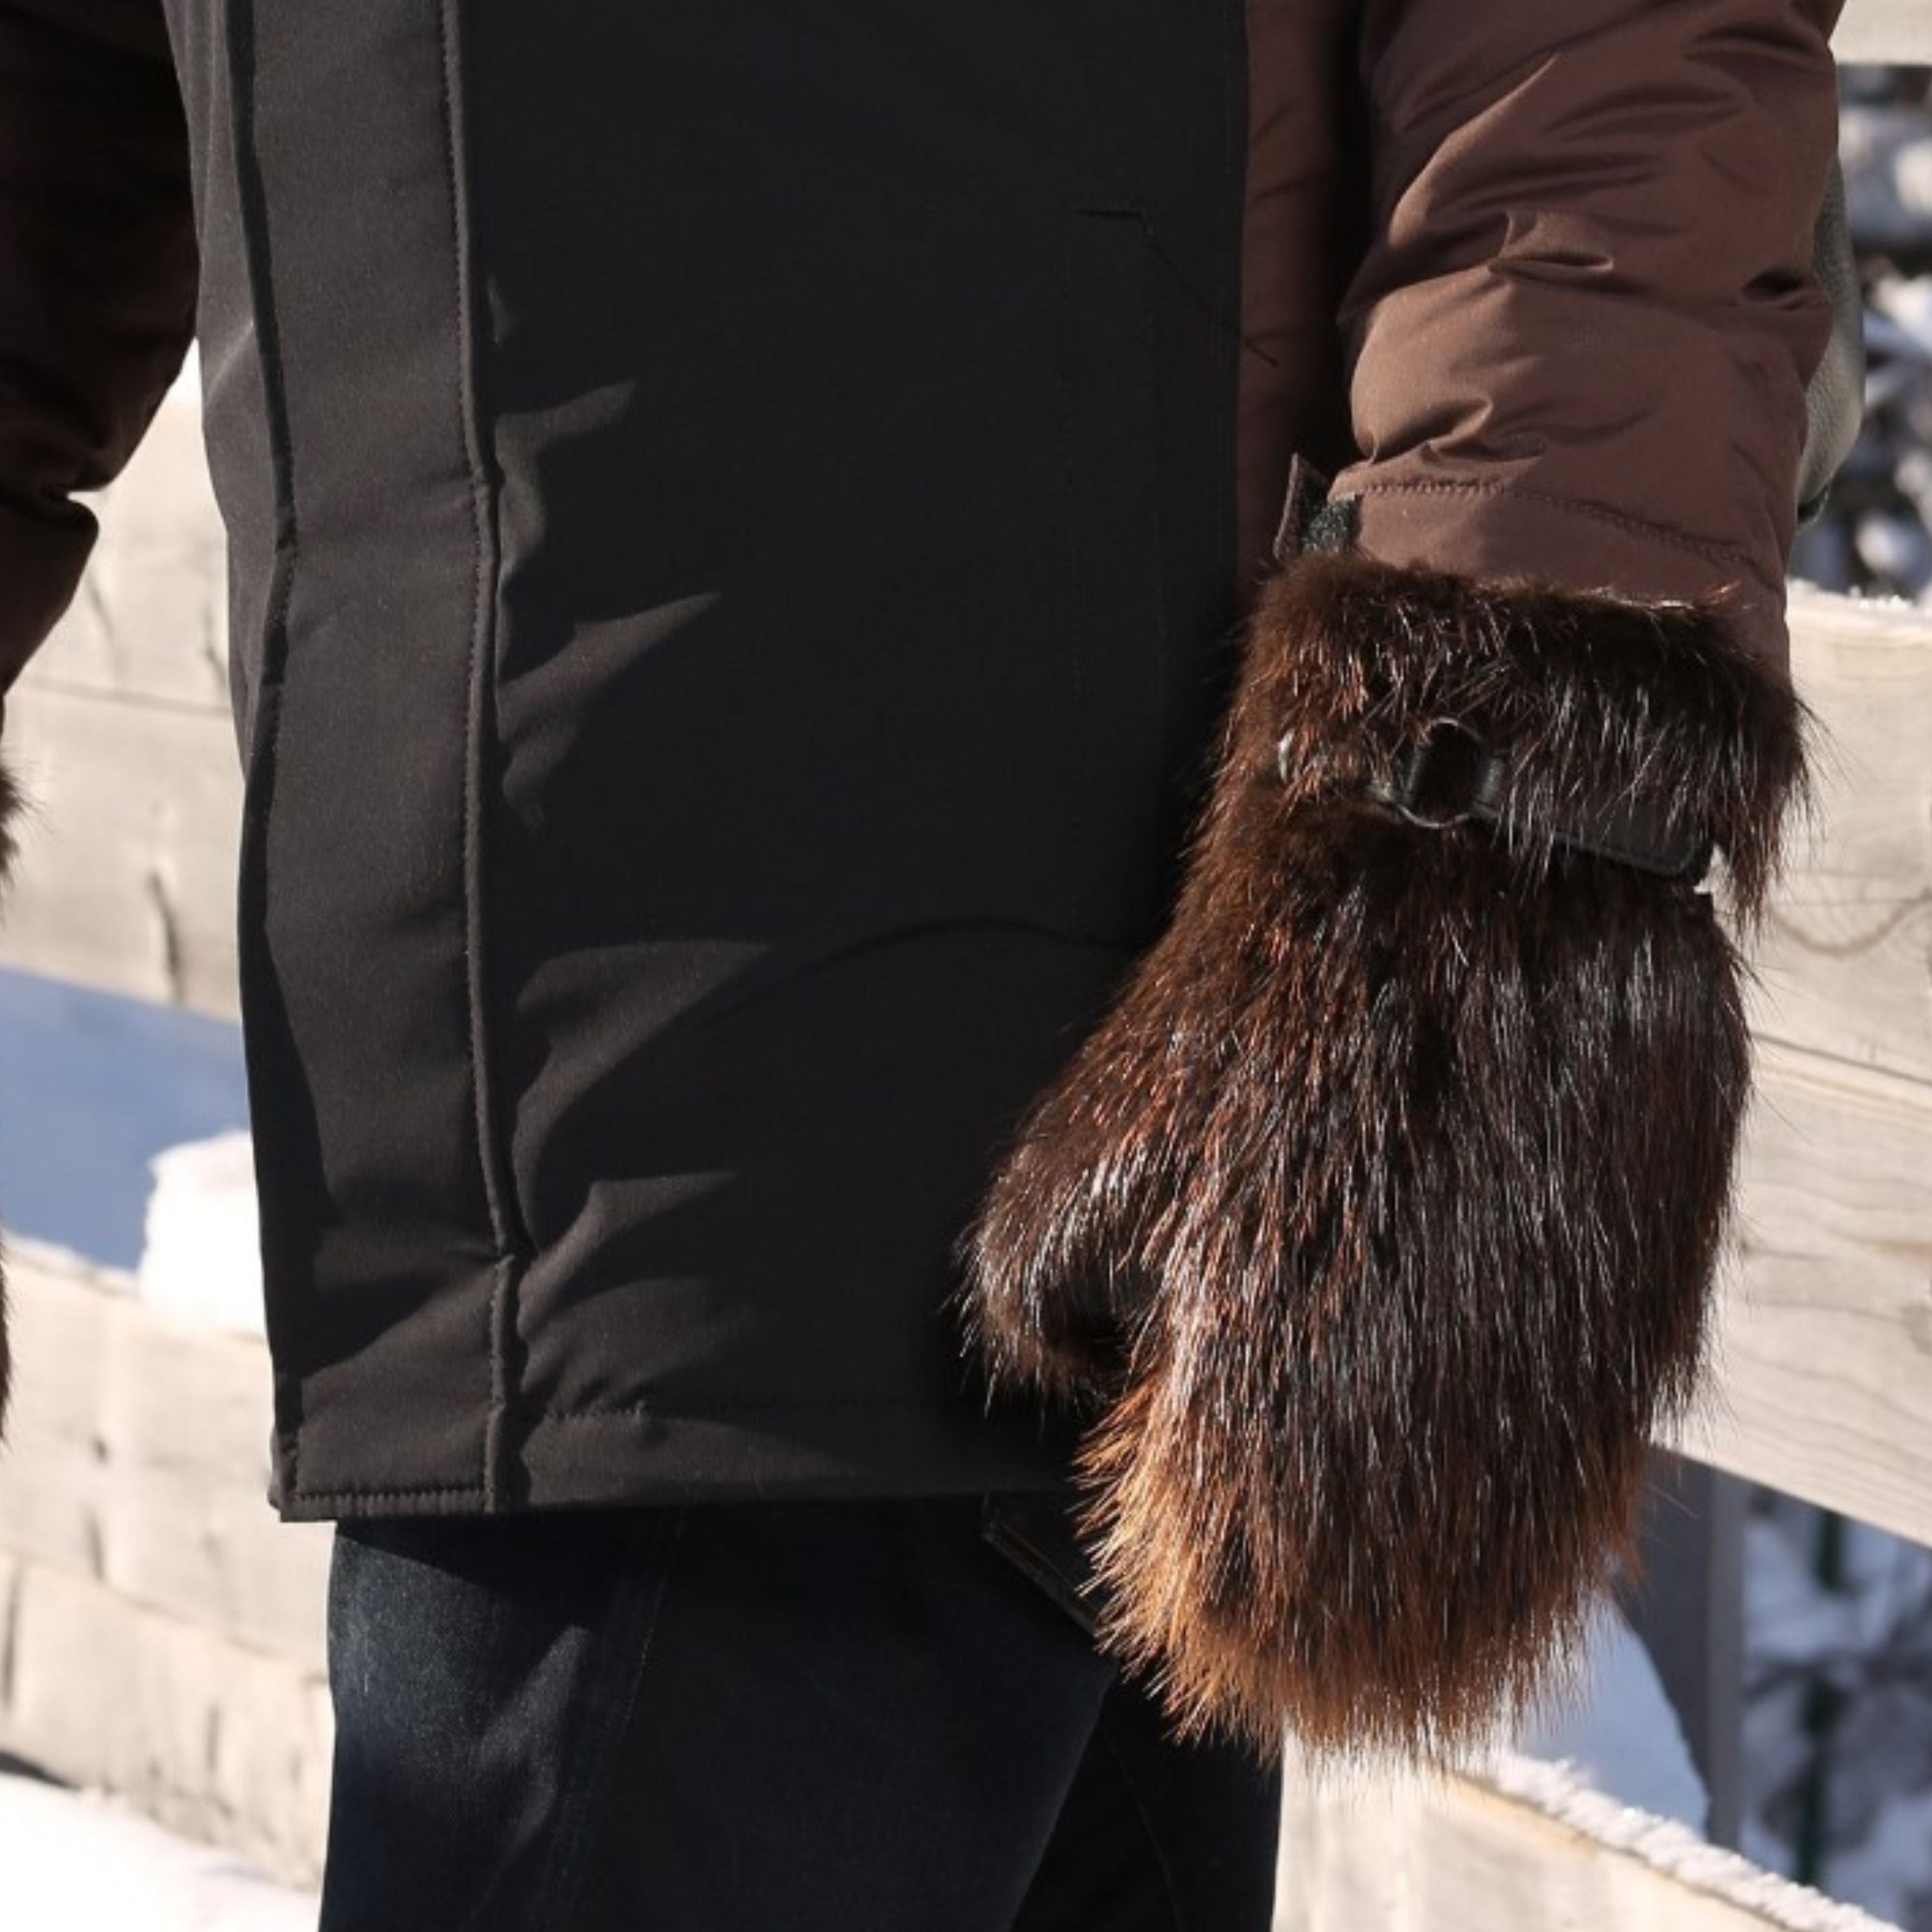 Beaver fur outdoor mitts - Unisex